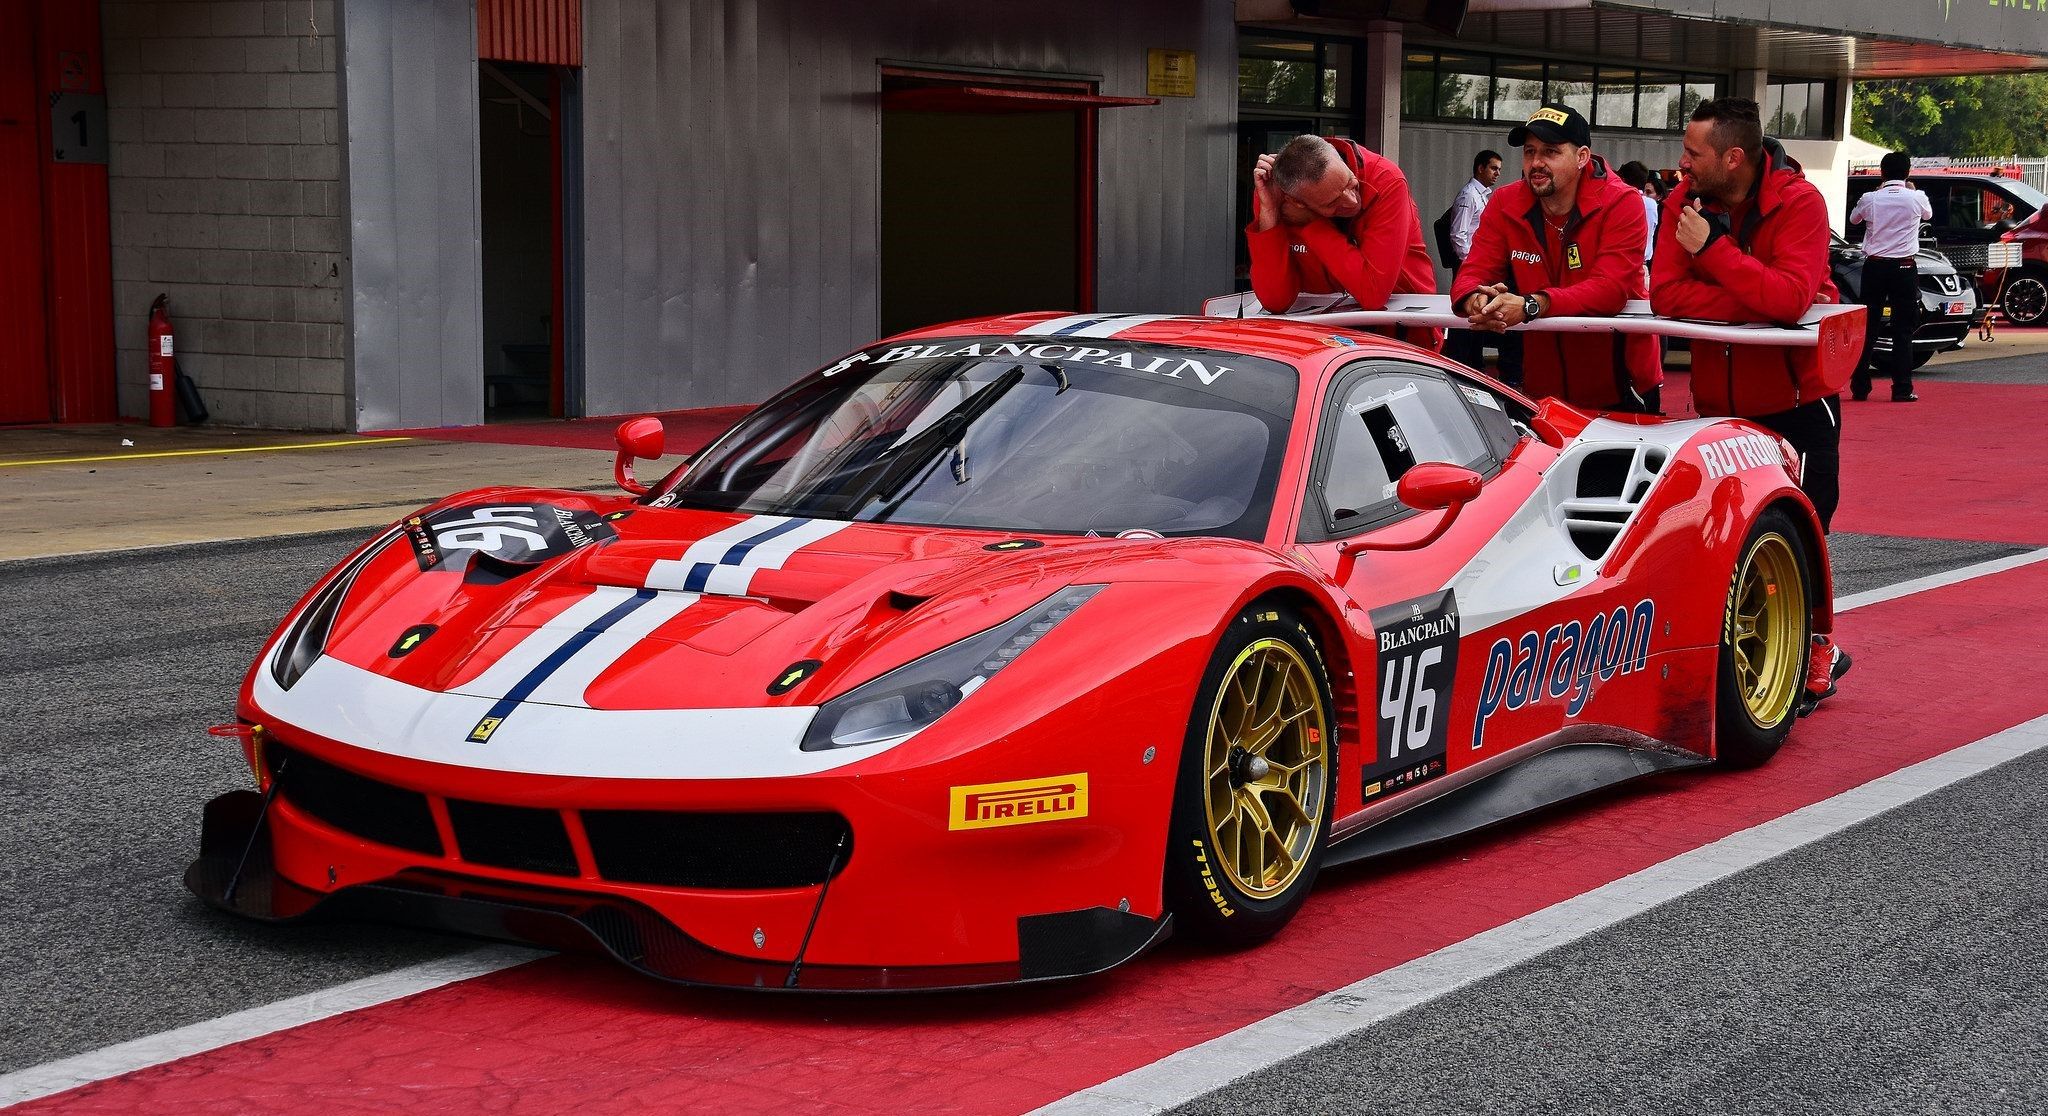 Ferrari drivers leaning on a race car